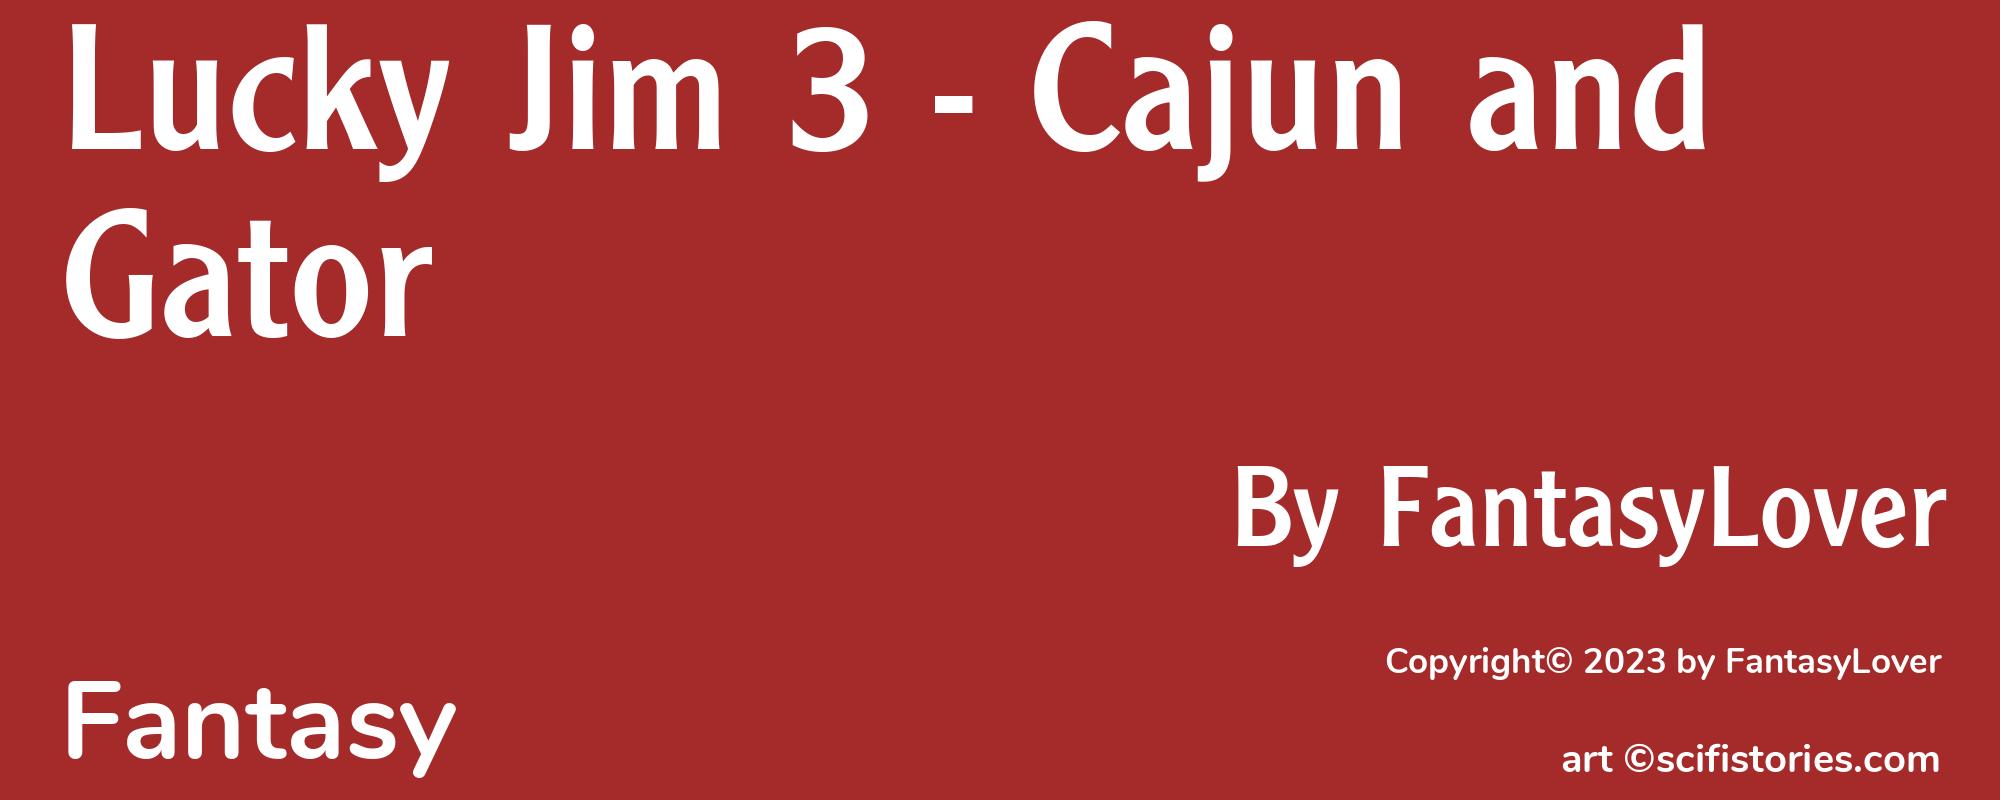 Lucky Jim 3 - Cajun and Gator - Cover